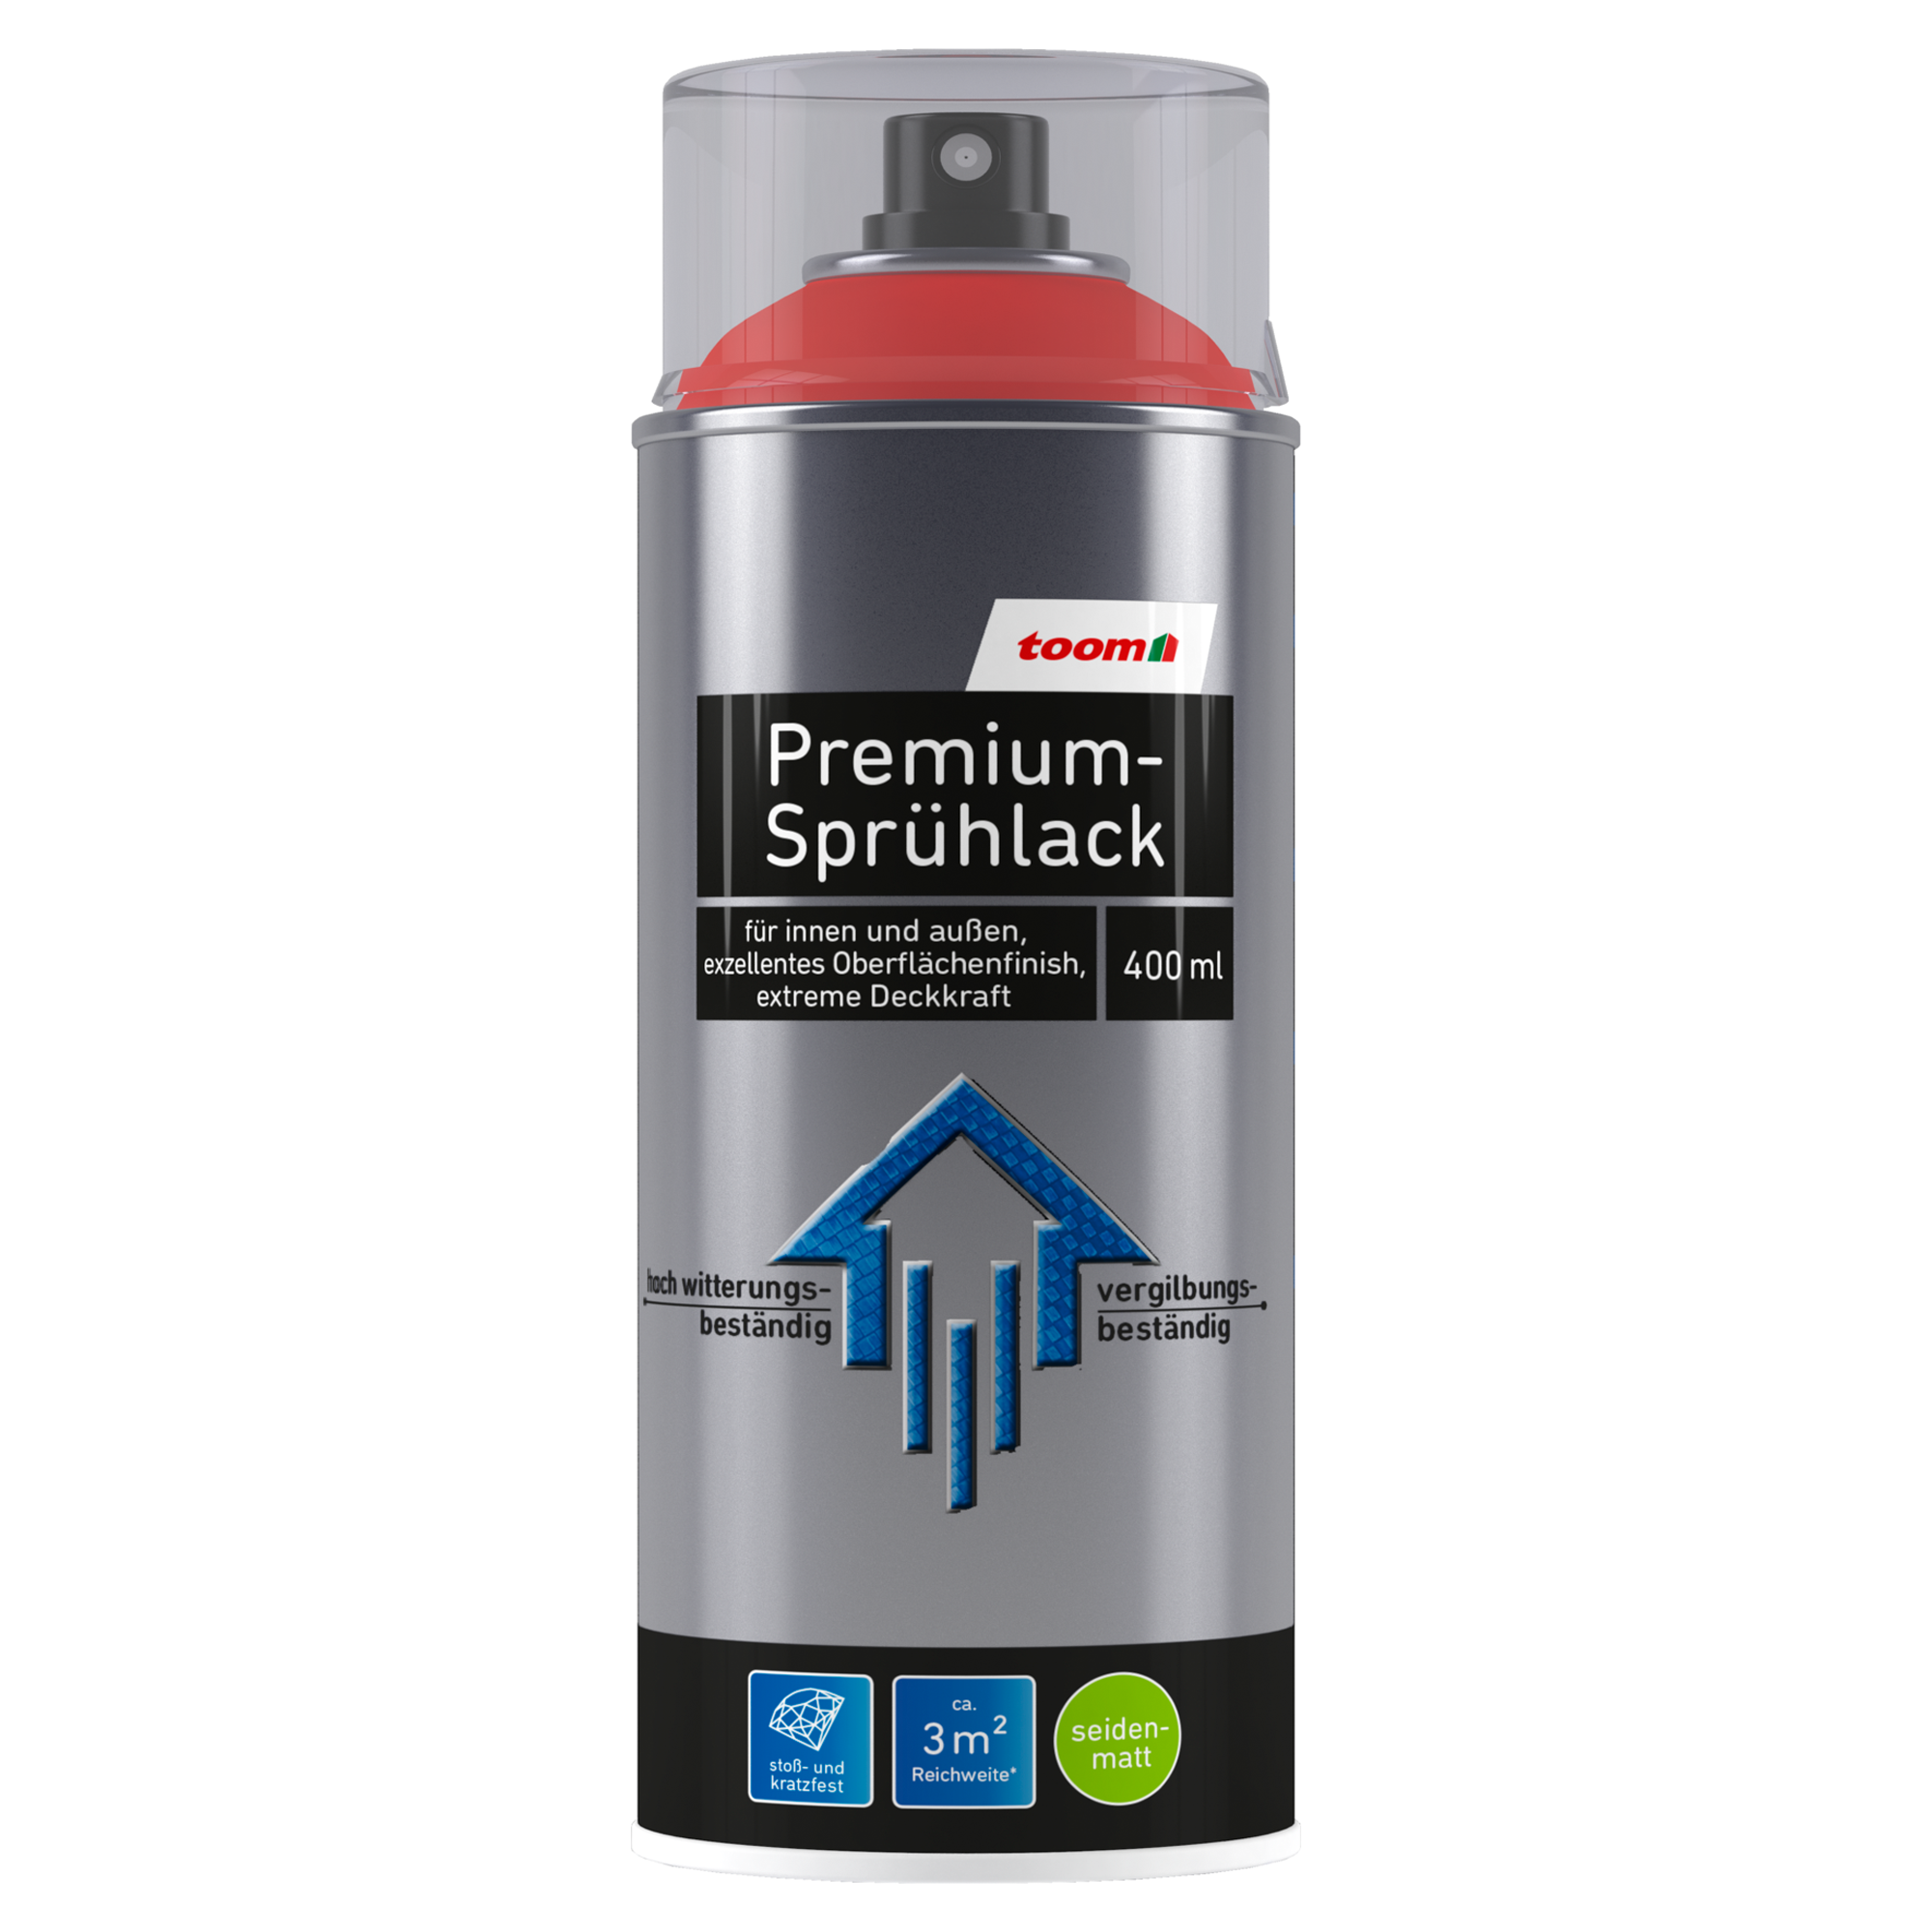 Premium-Sprühlack verkehrsrot seidenmatt 400 ml + product picture